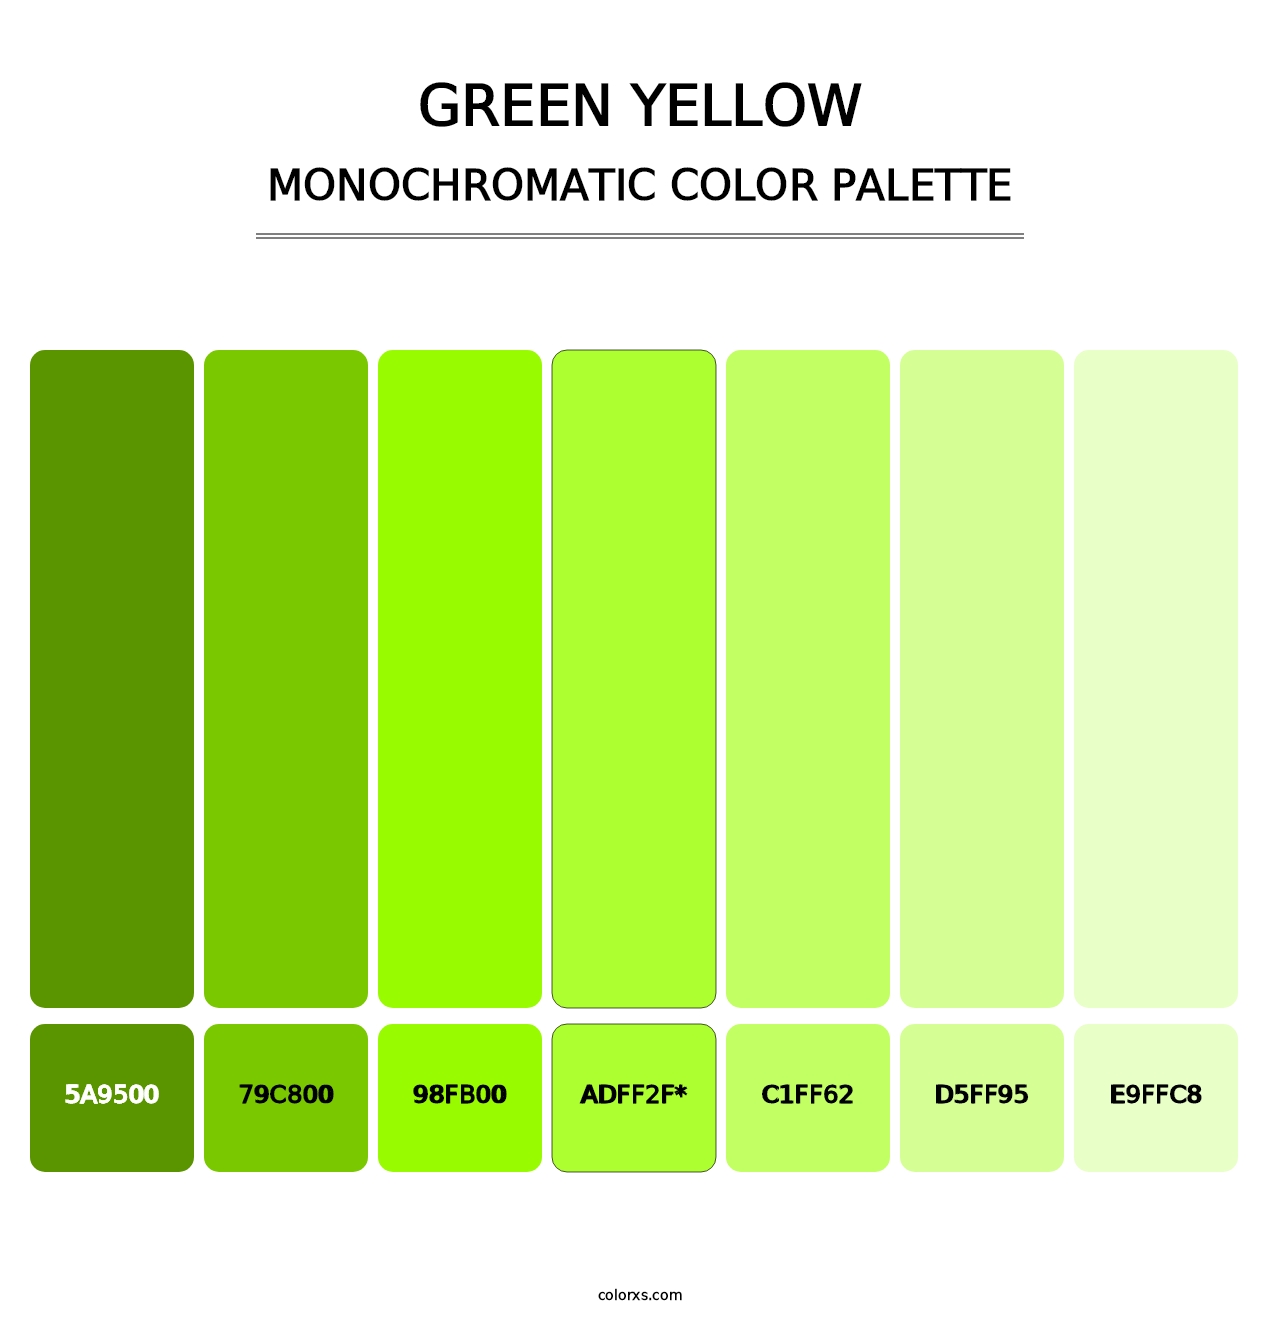 Green Yellow - Monochromatic Color Palette